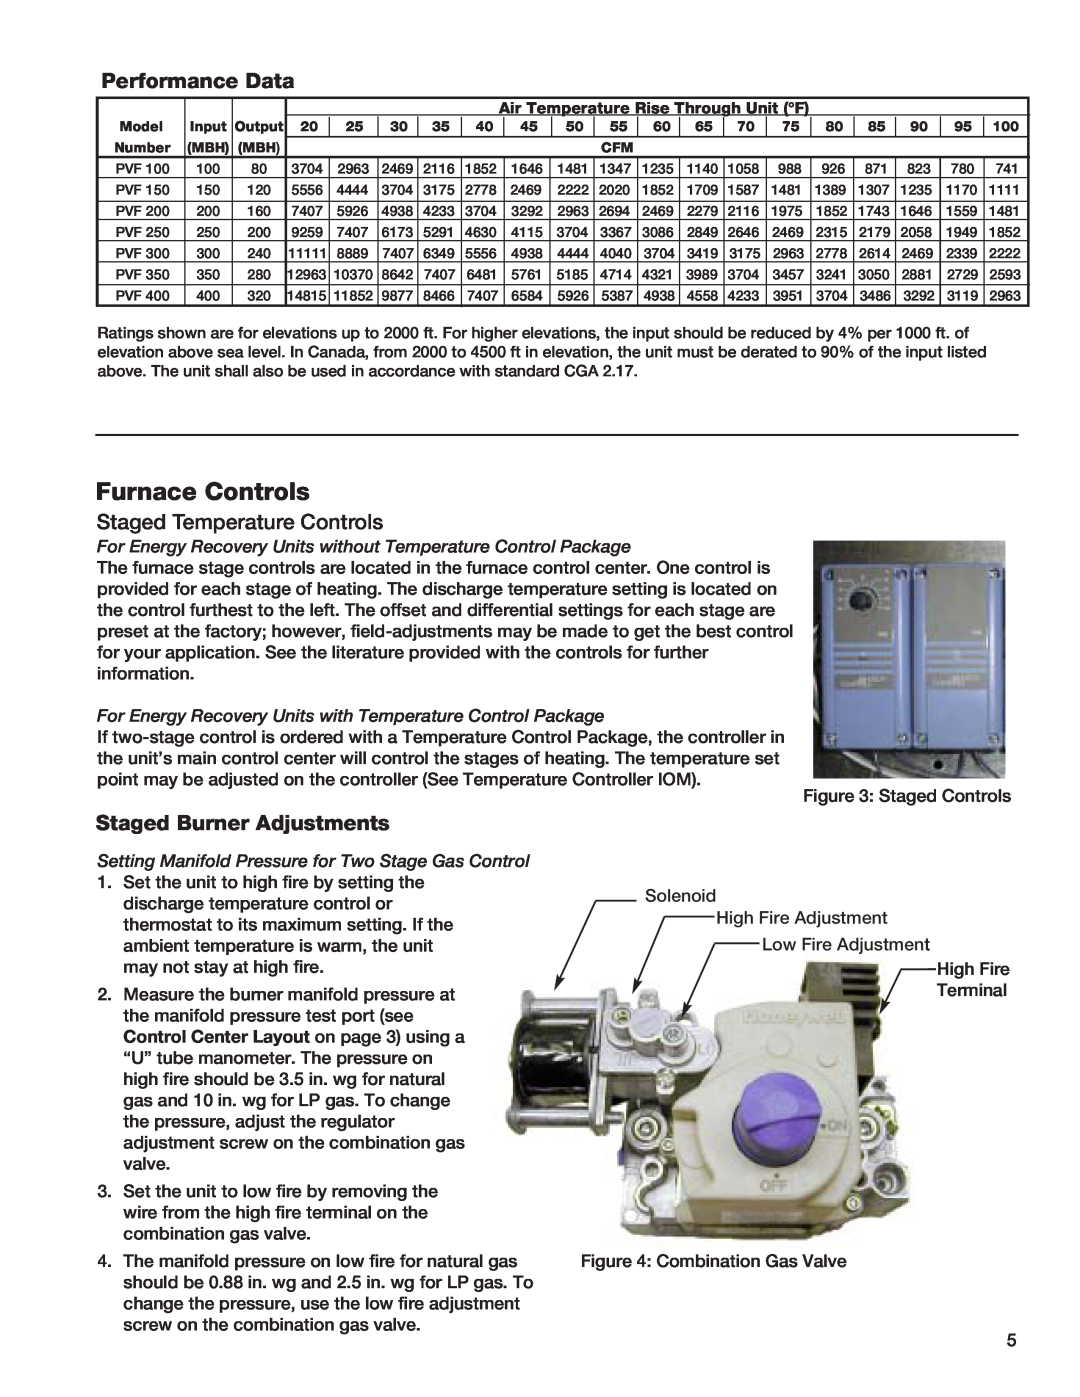 Greenheck Fan PVF manual Furnace Controls, Performance Data, Staged Temperature Controls, Staged Burner Adjustments 